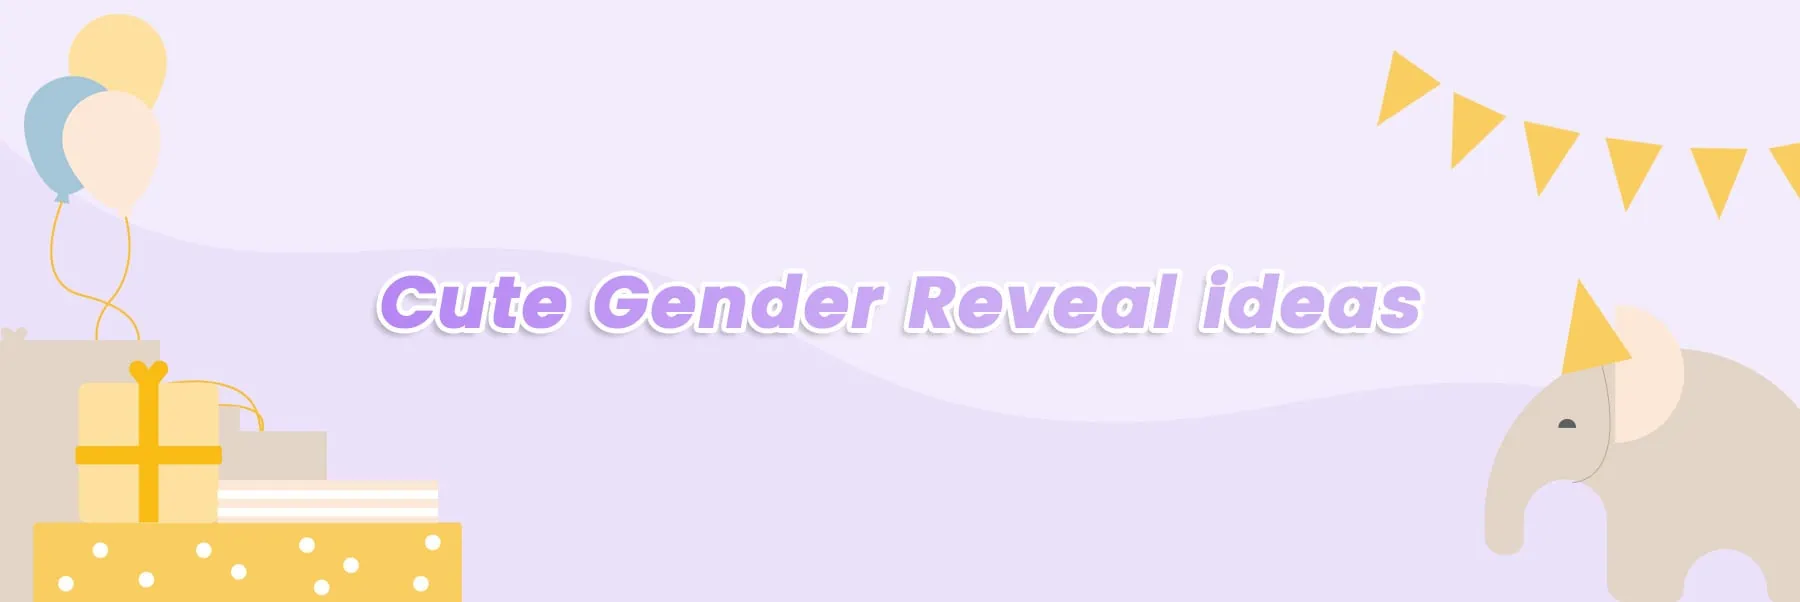 wbs gender reveal ideas